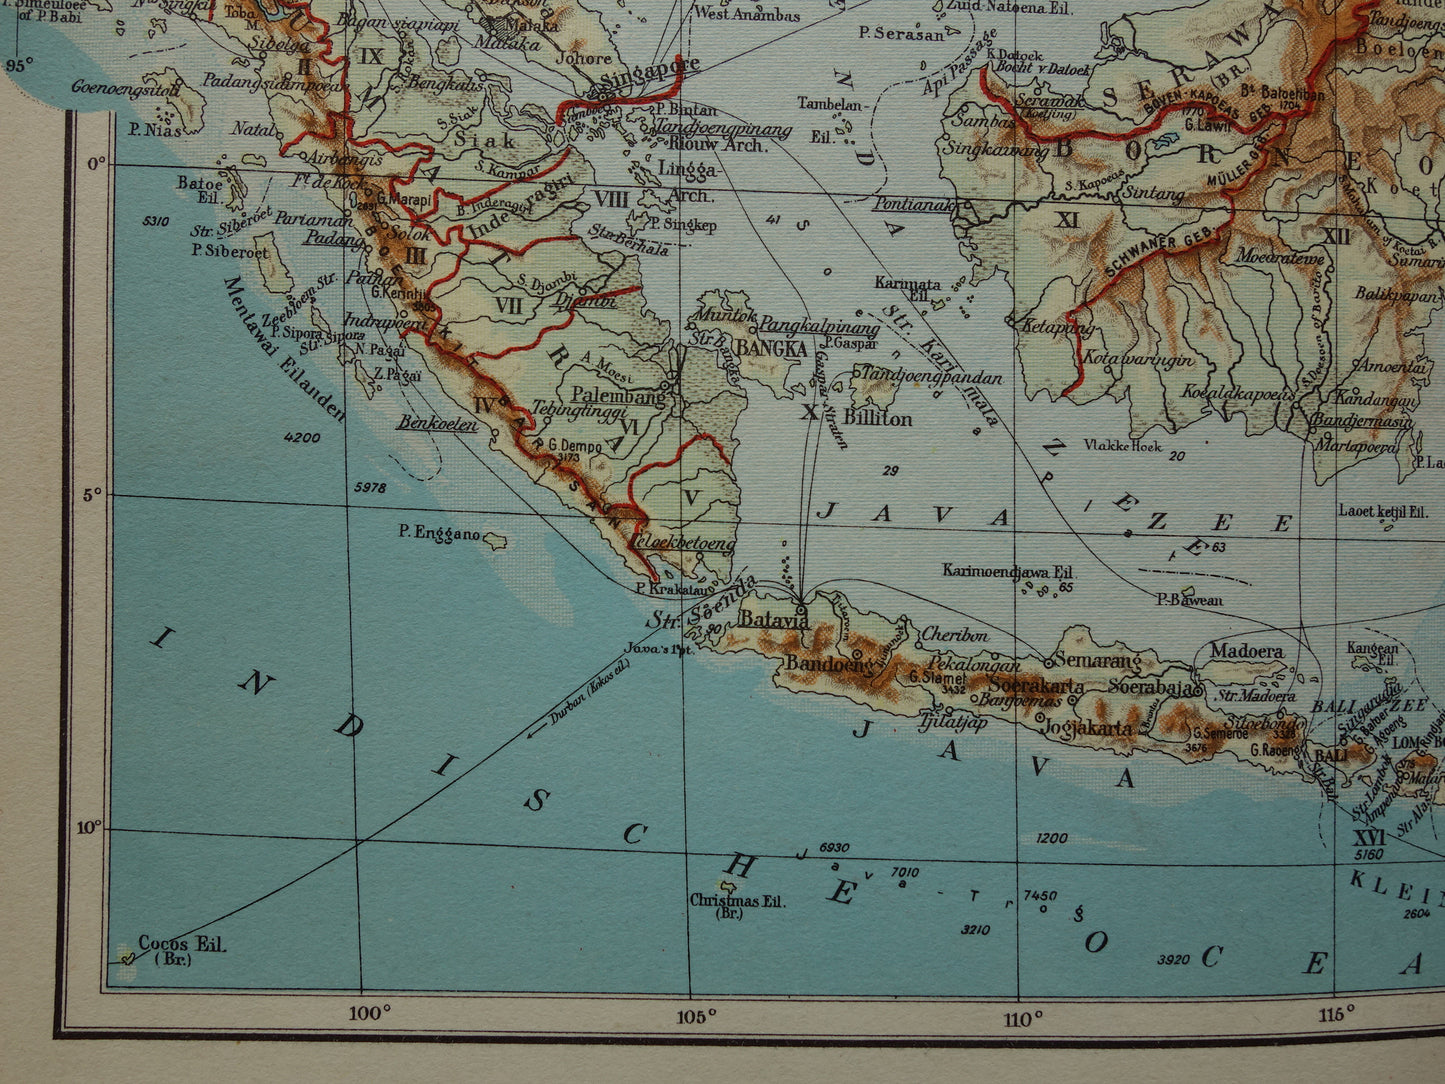 INDONESIË oude kaart van Indonesië Filipijnen Zuidoost-Azië 1937 originele vintage Nederlandse landkaart Nederlandsch Indië Batavia Atjeh Java